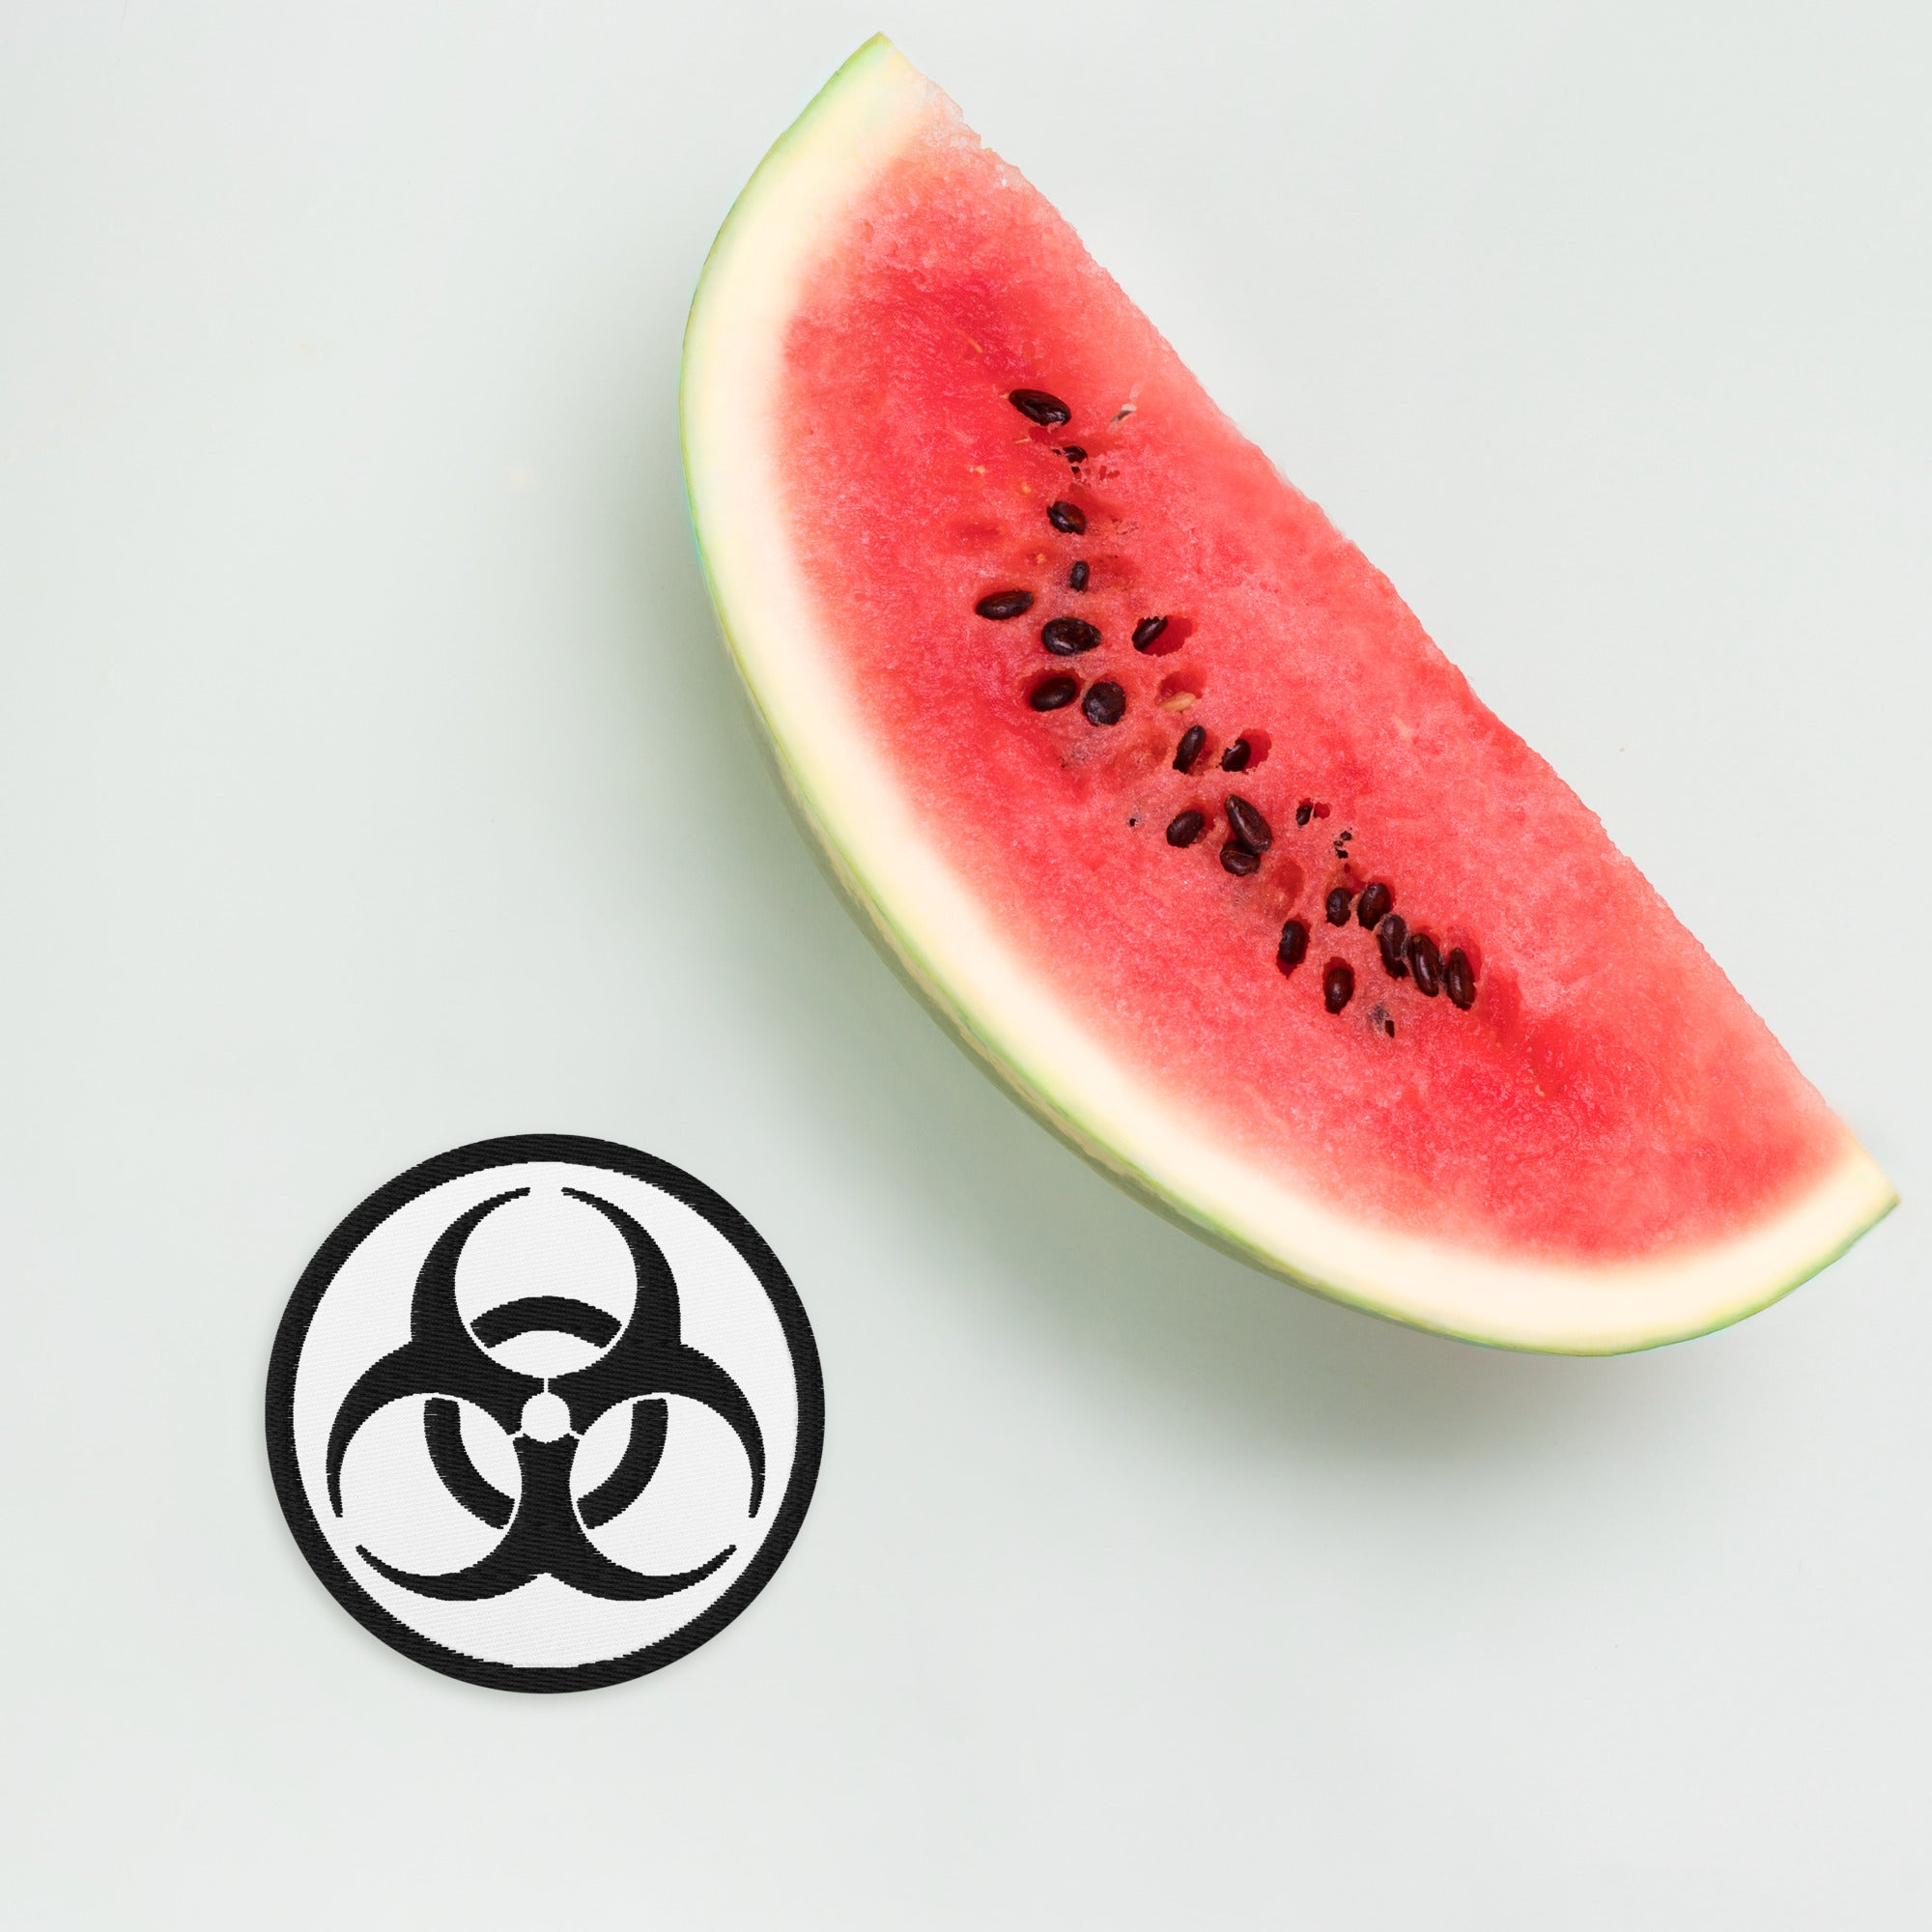 Black Thread Bio Hazard Symbol Warning Sign Embroidered Patch Zombie Apocalypse - Edge of Life Designs